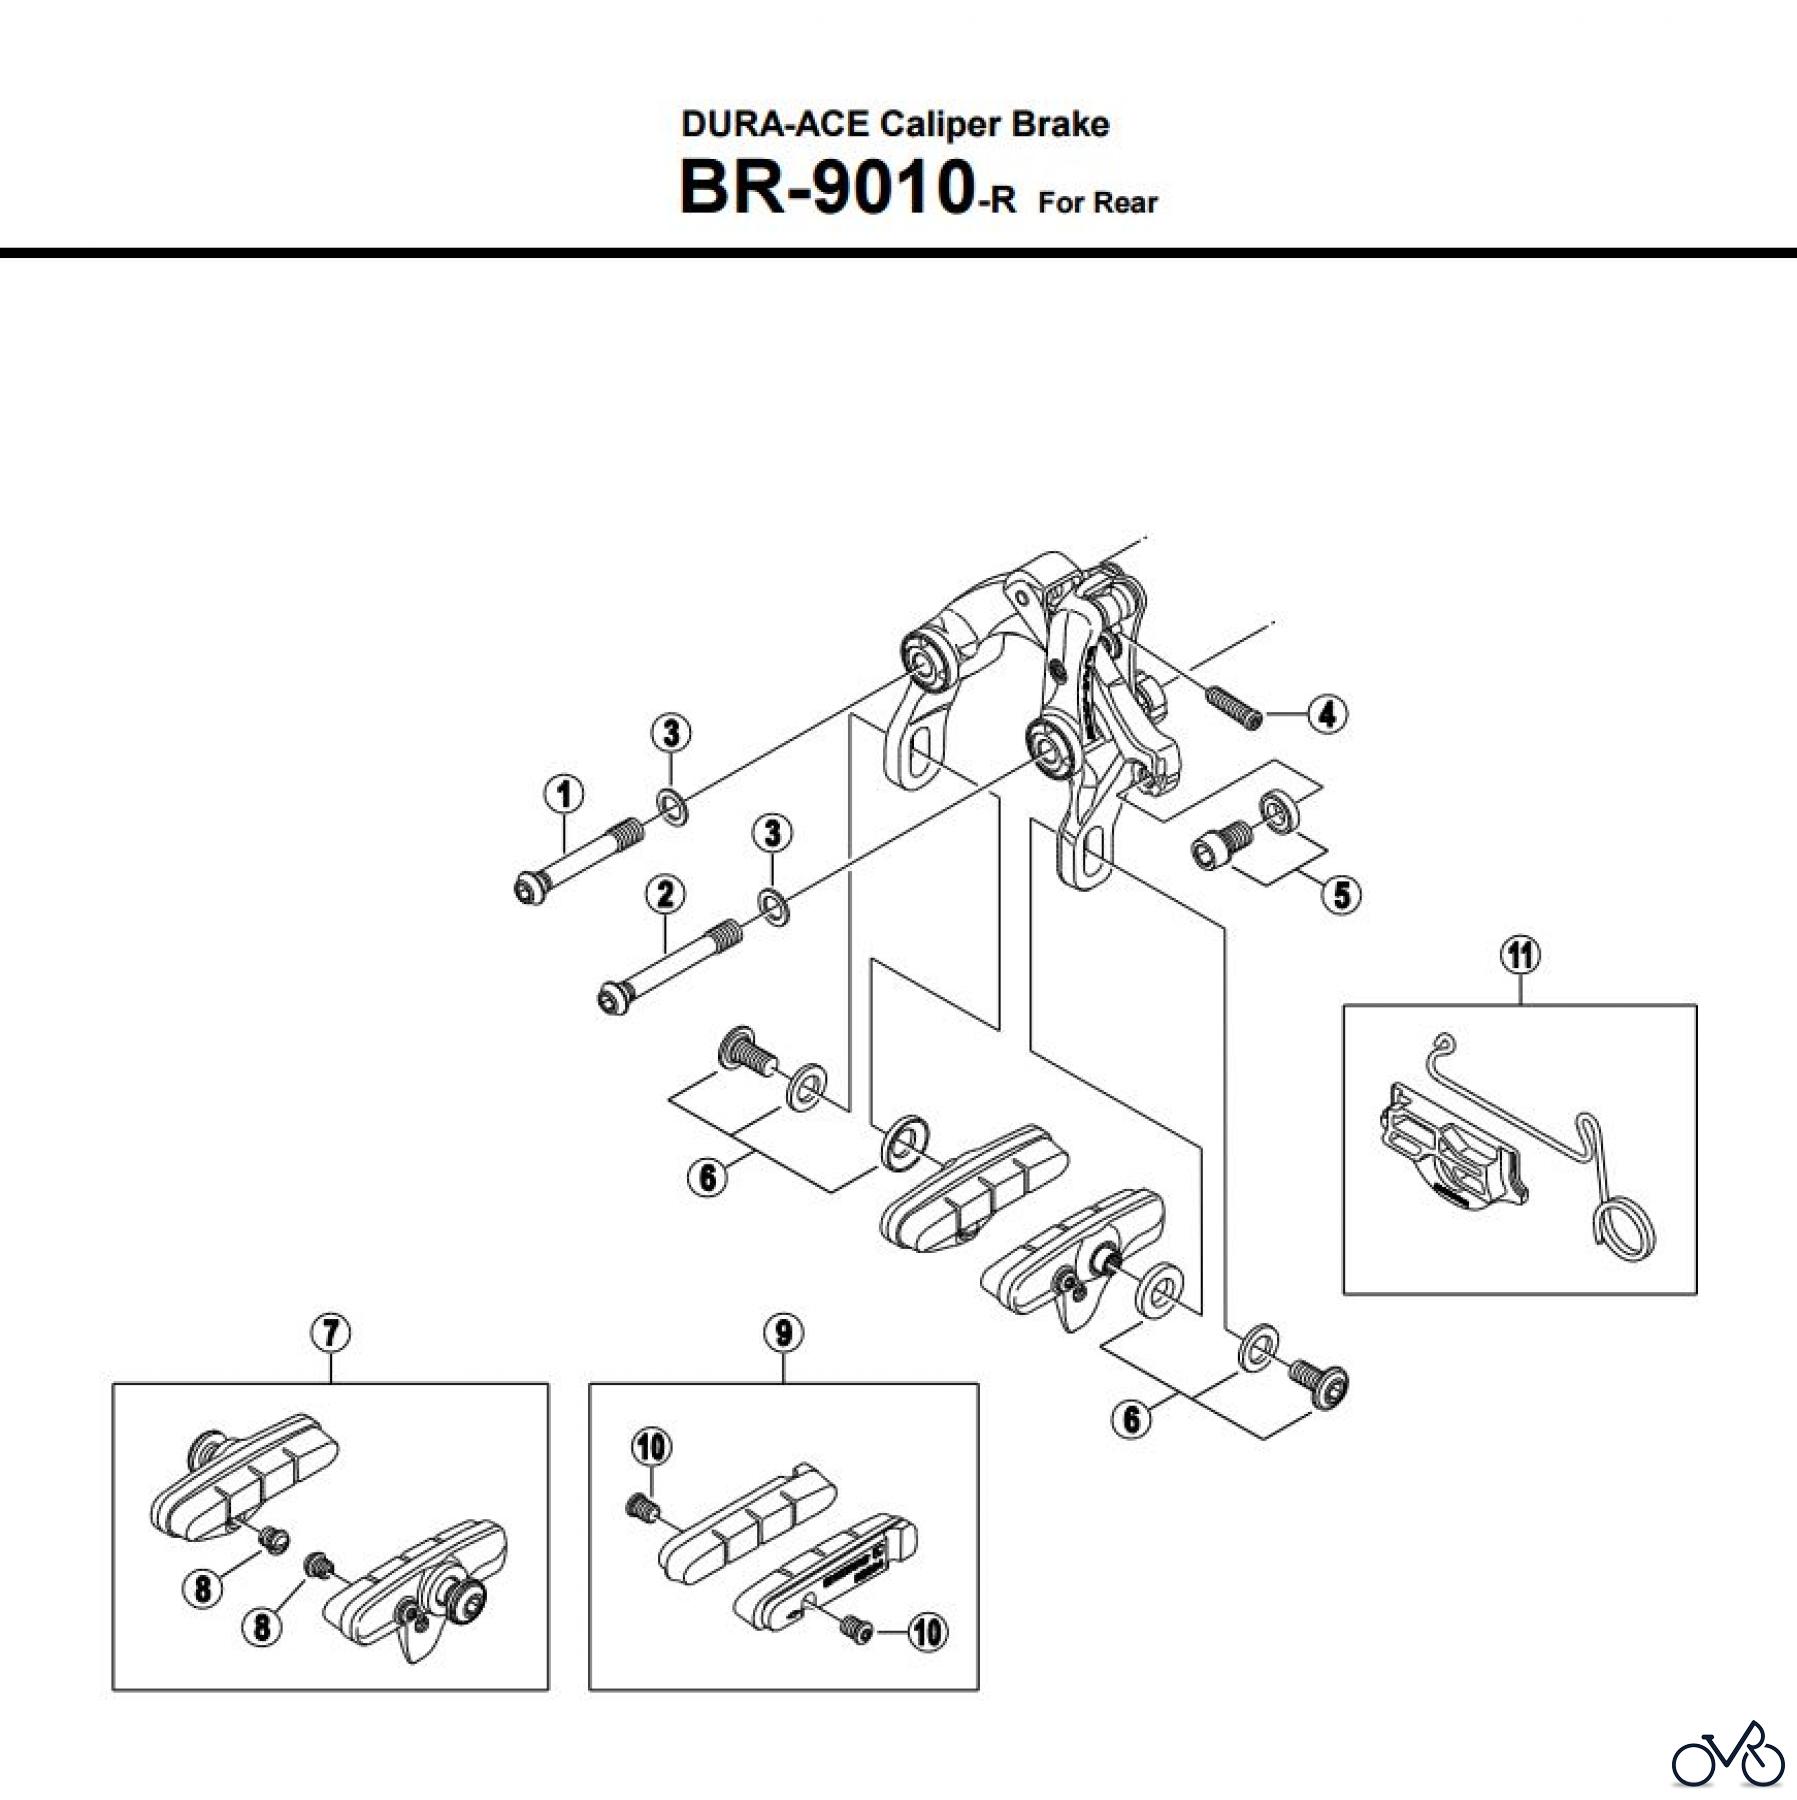  Shimano BR Brake - Bremse BR-9010-R -3462A DURA-ACE Caliper Brake For Rear